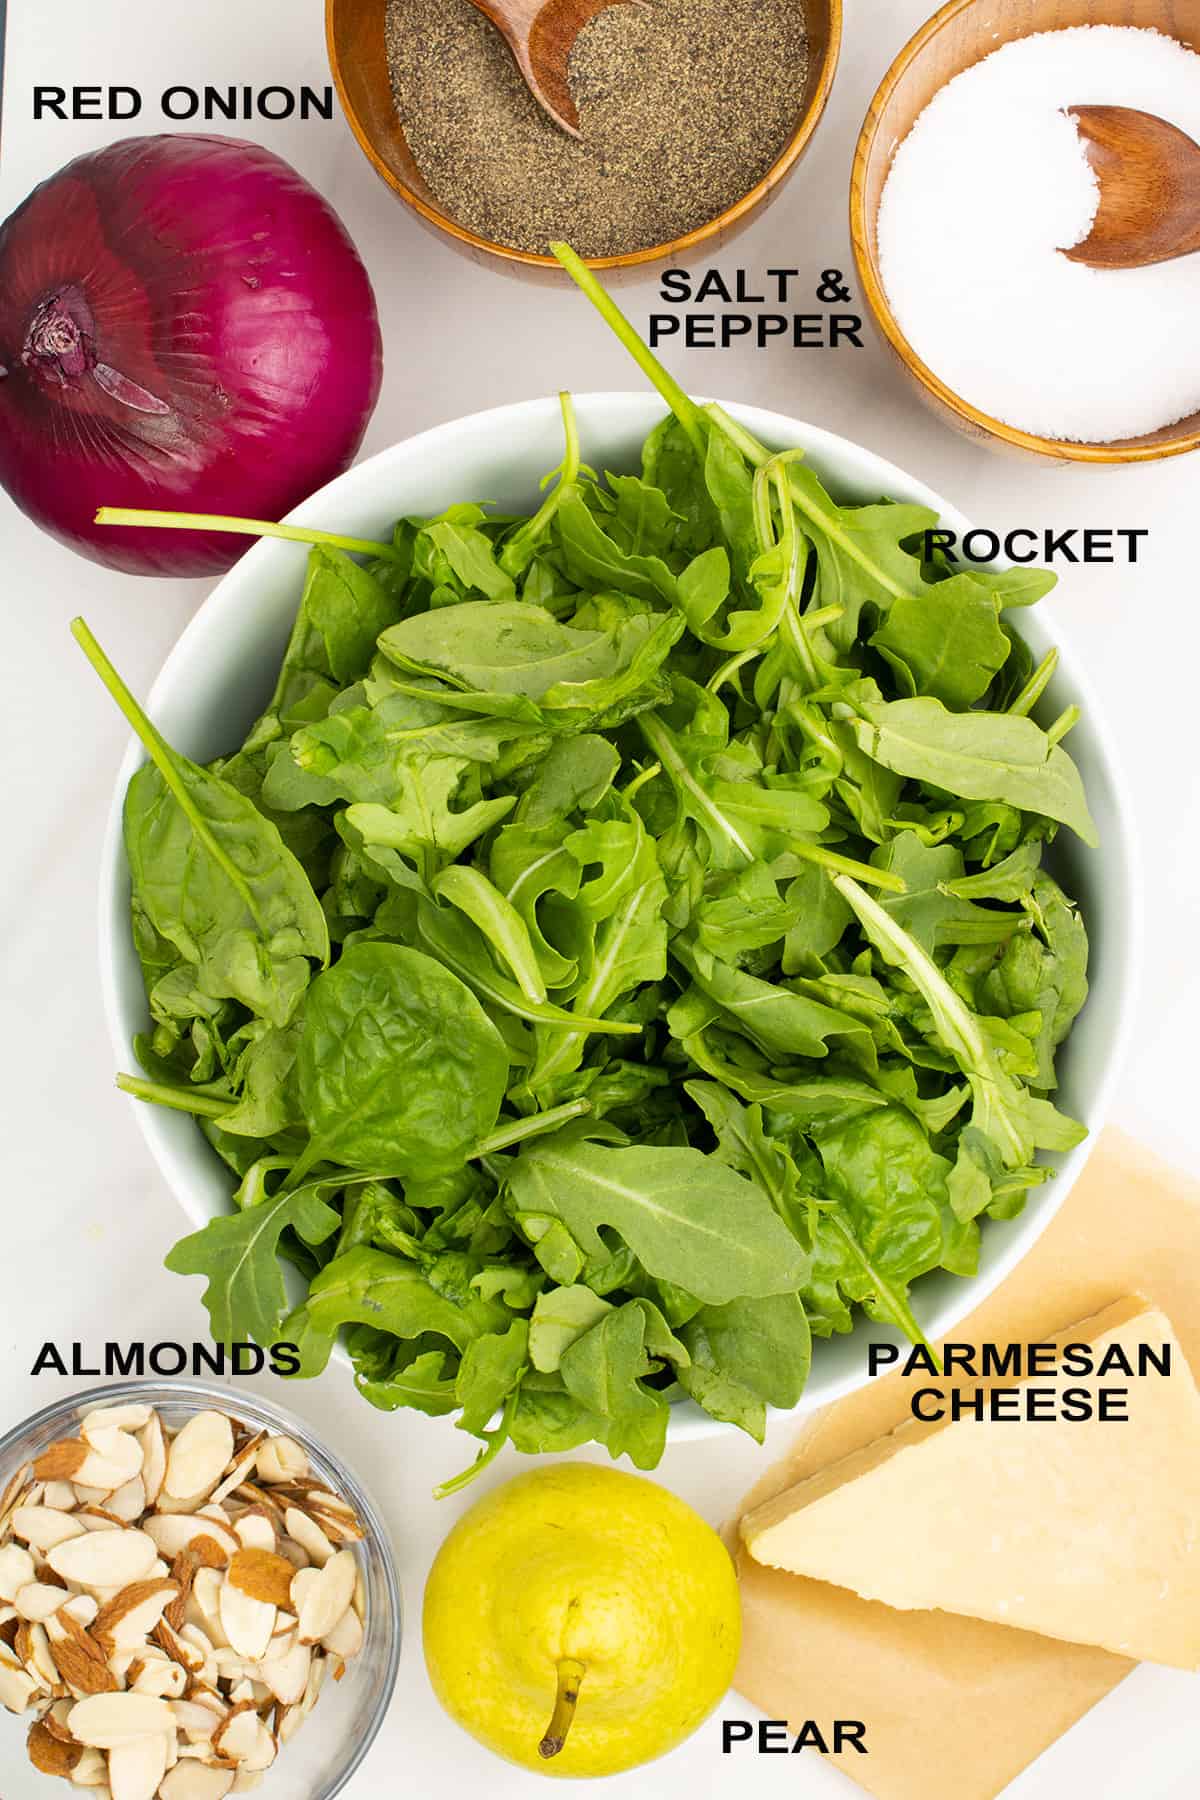 Rocket and Pear Salad ingredients.